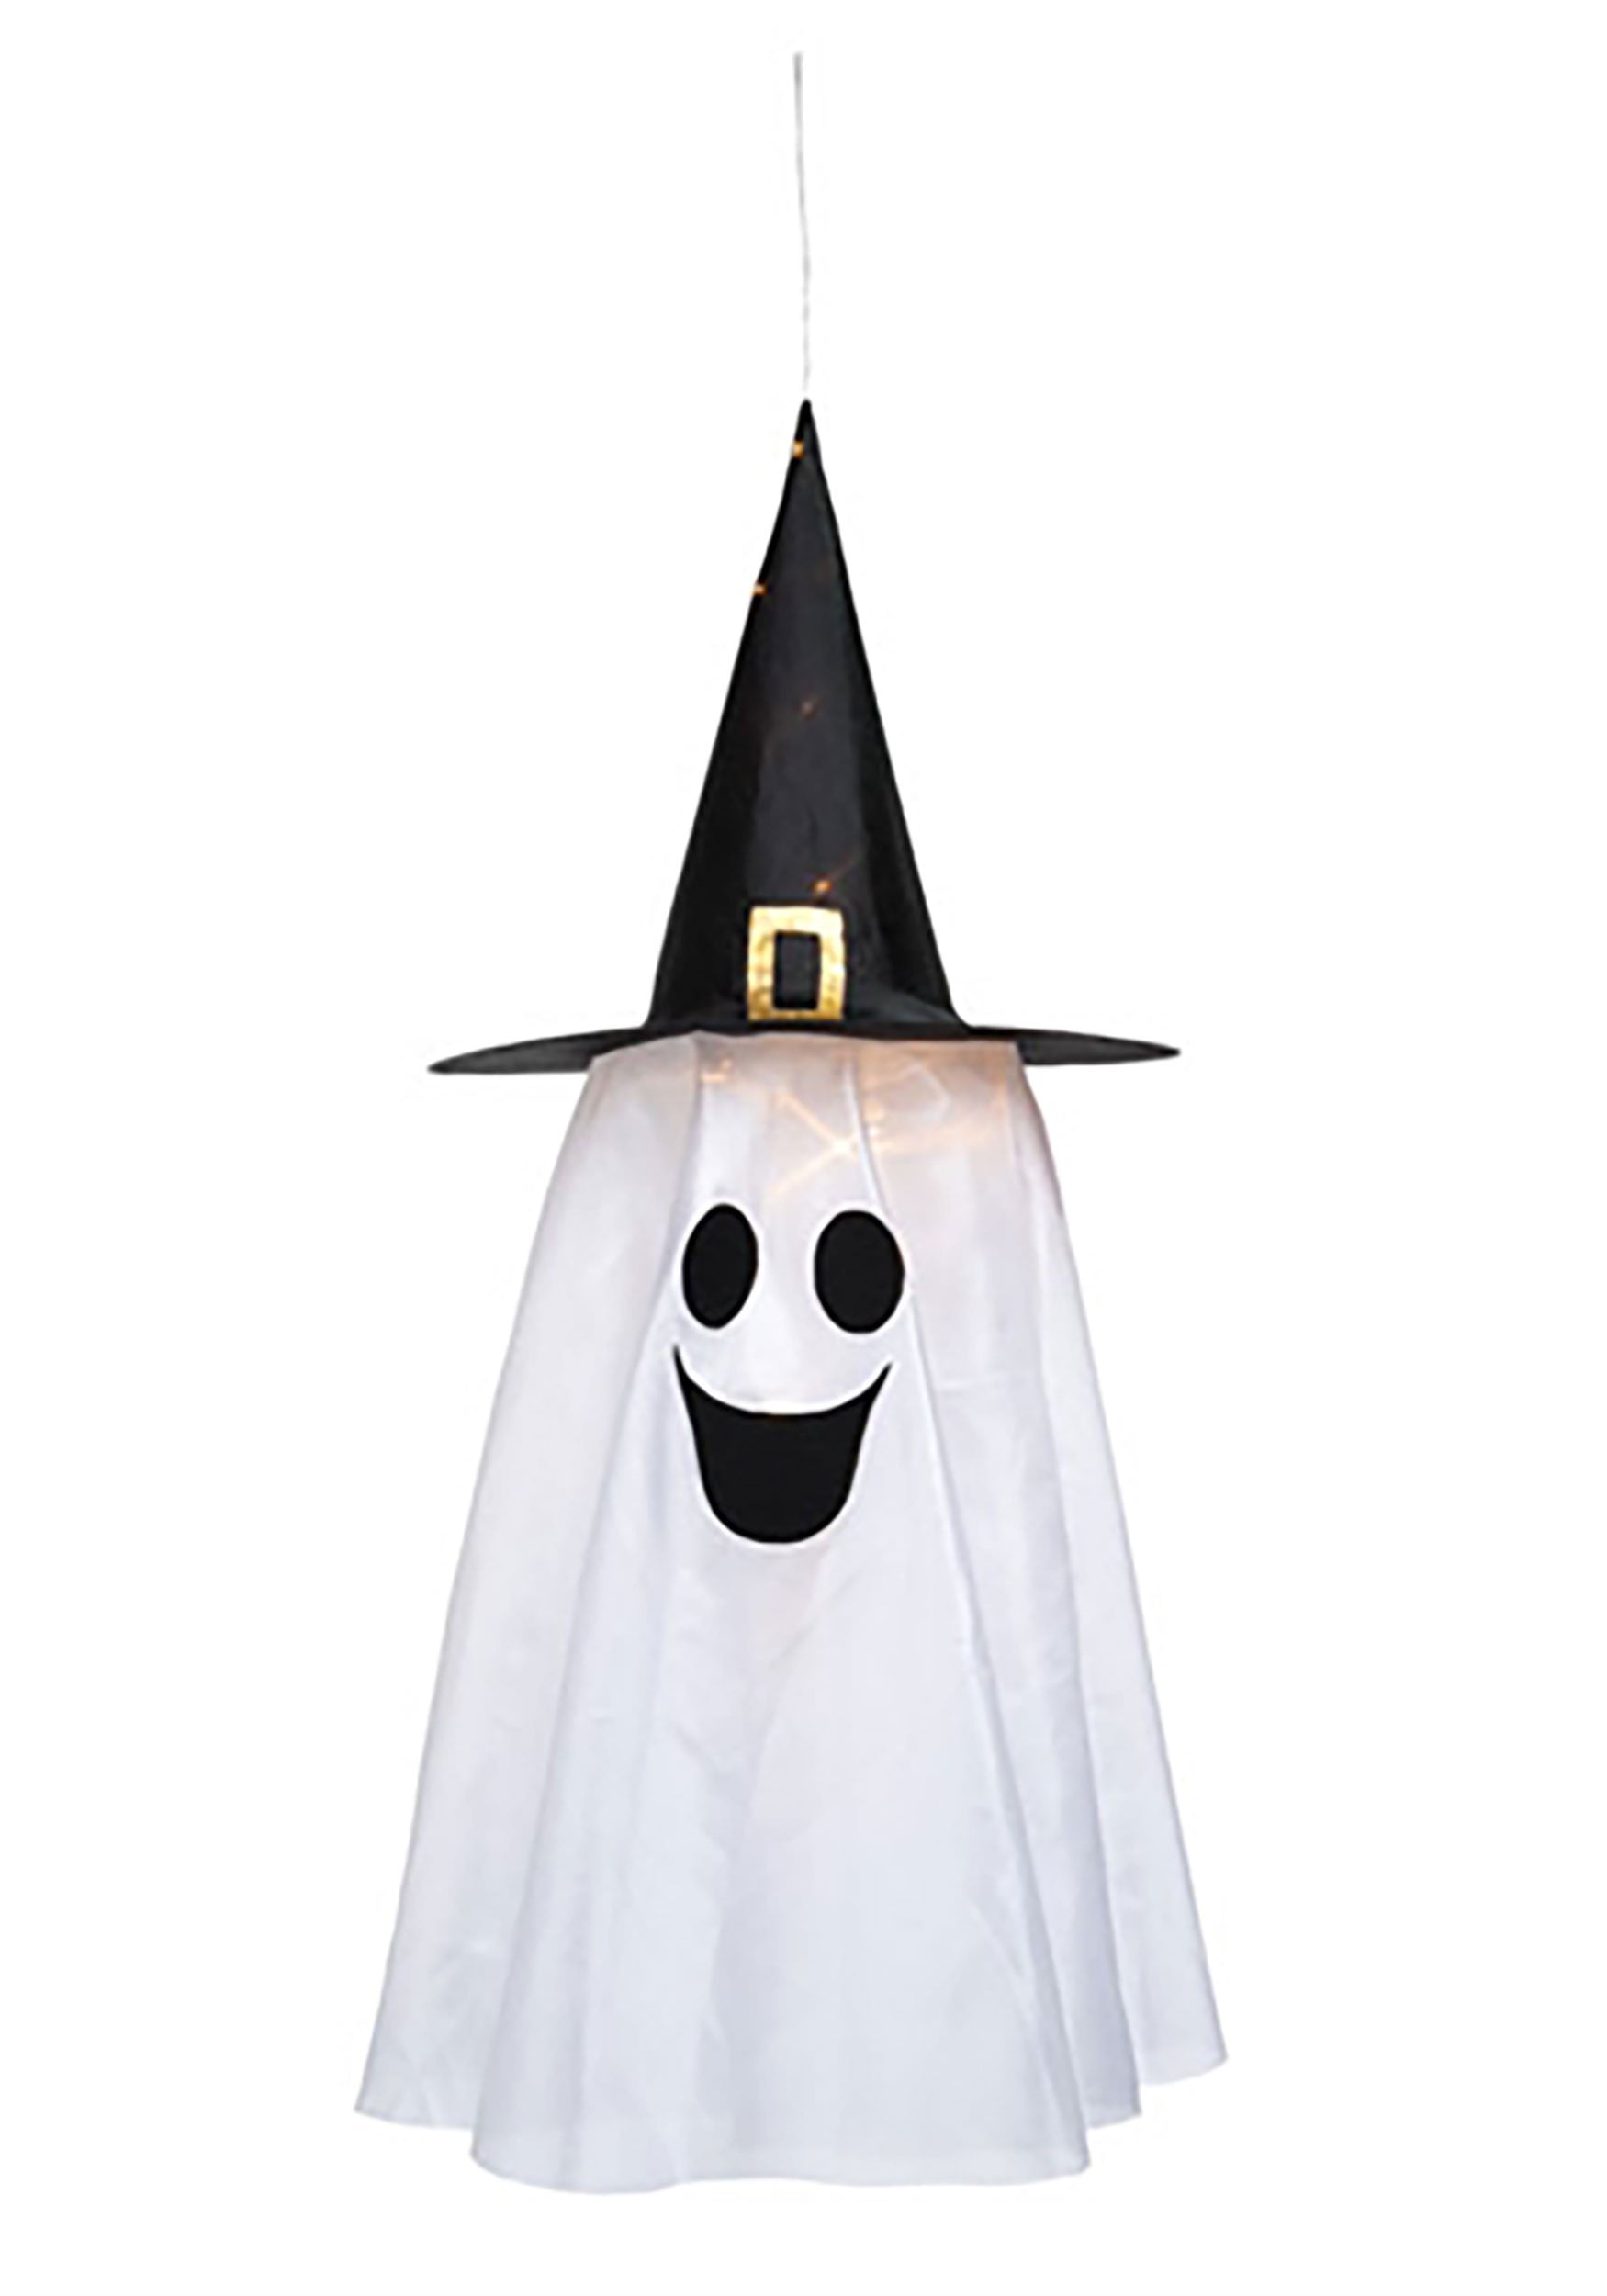 NWT 11.5" Black & White GHOST PUMPKIN HEAD in Witch Hat Halloween Decoration 